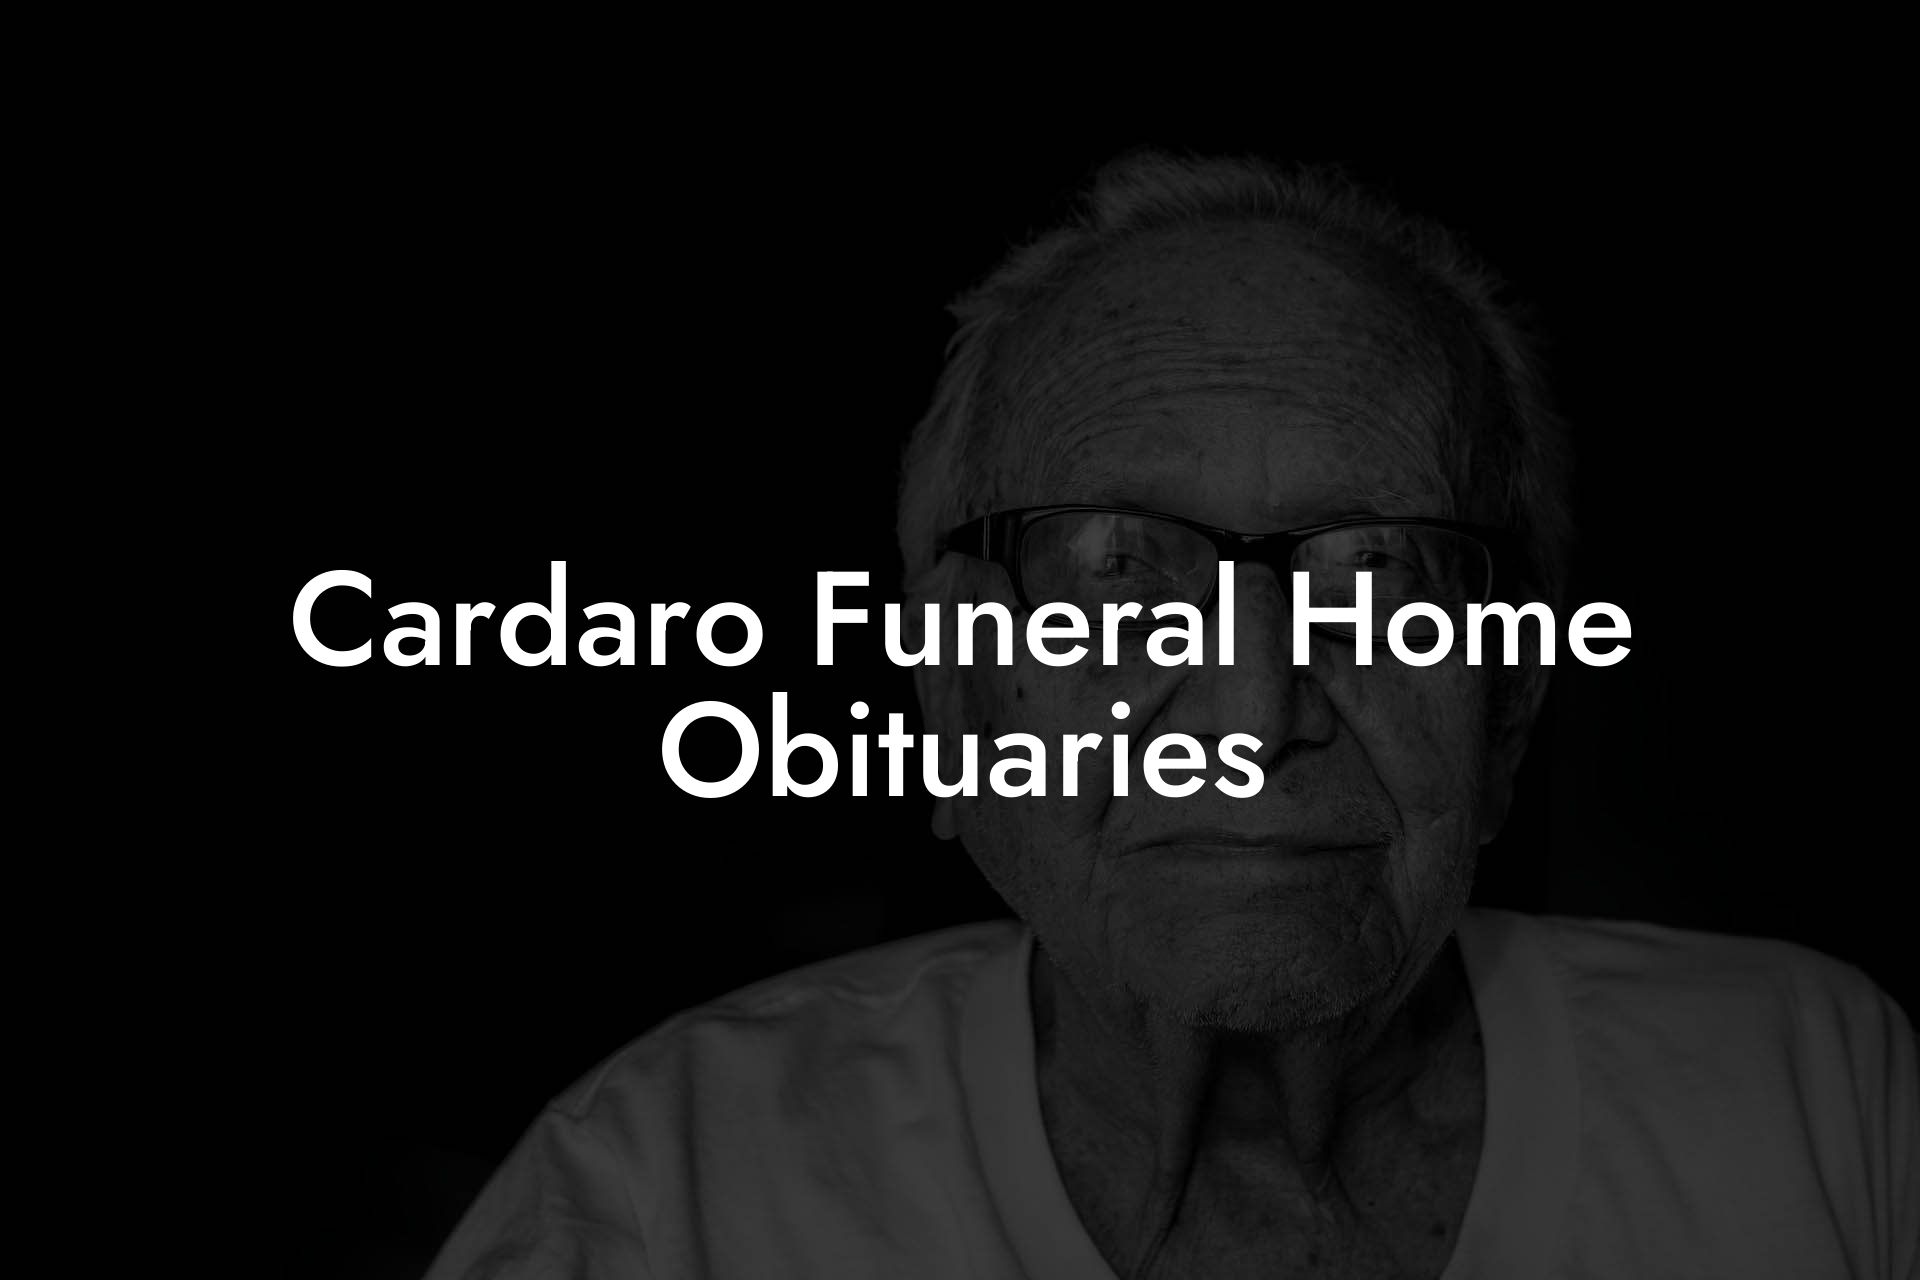 Cardaro Funeral Home Obituaries